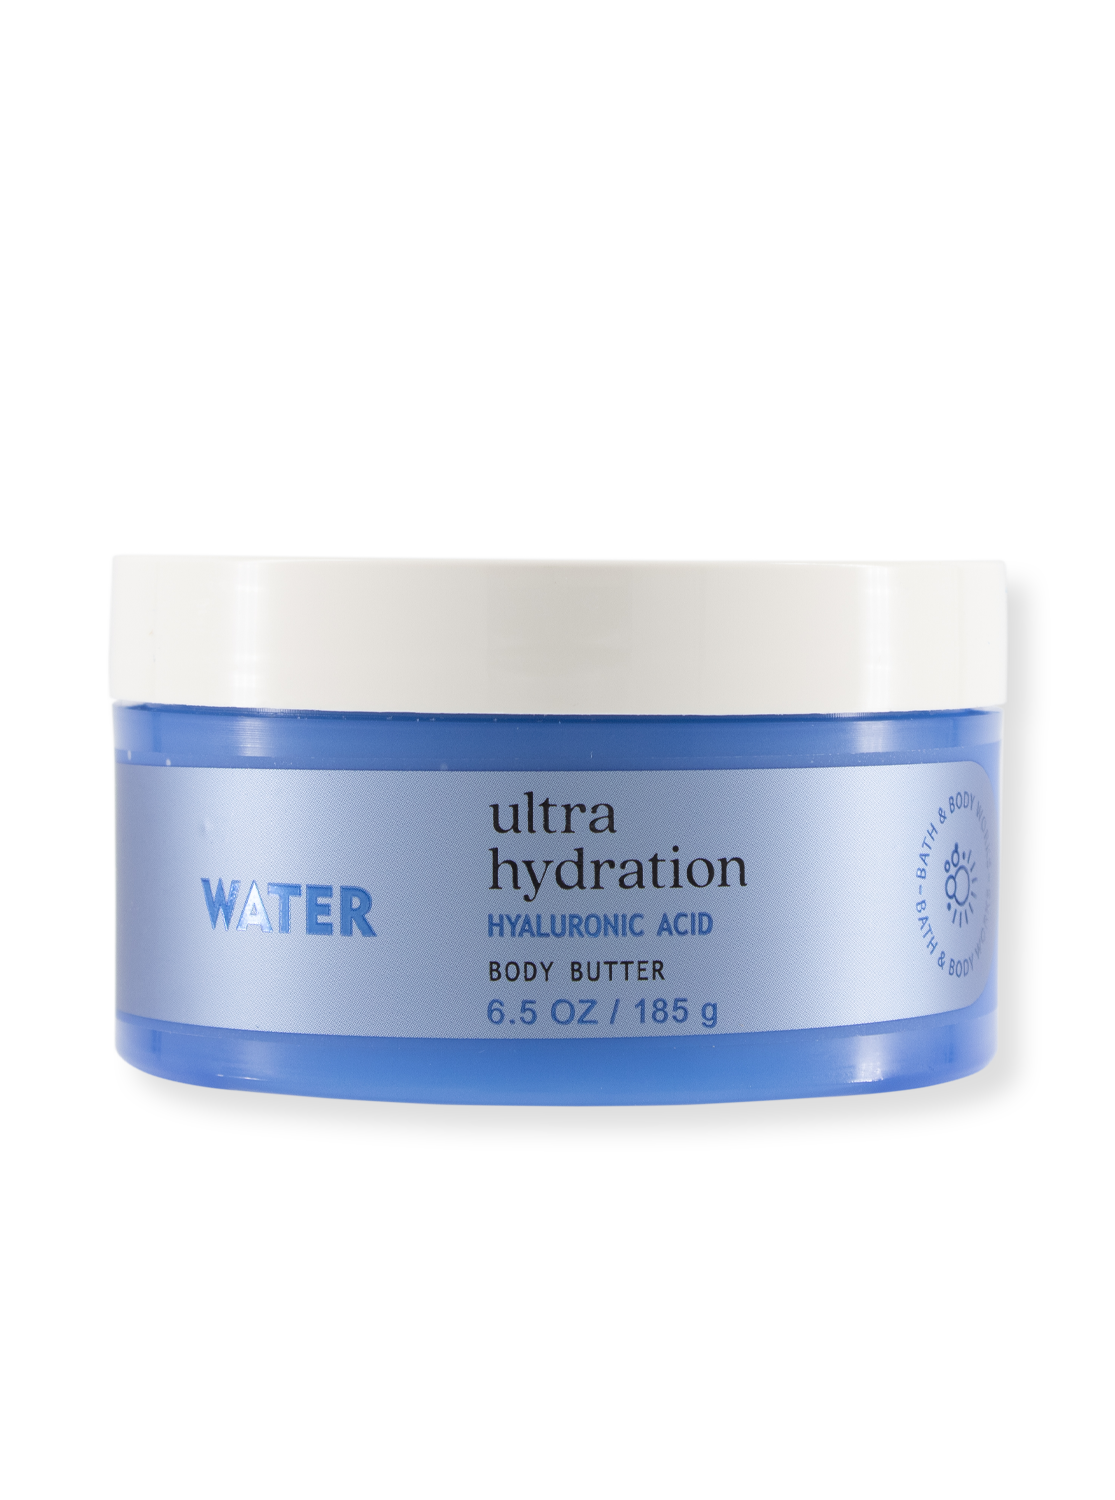 Body Butter - WATER - ultra hydration - 185g